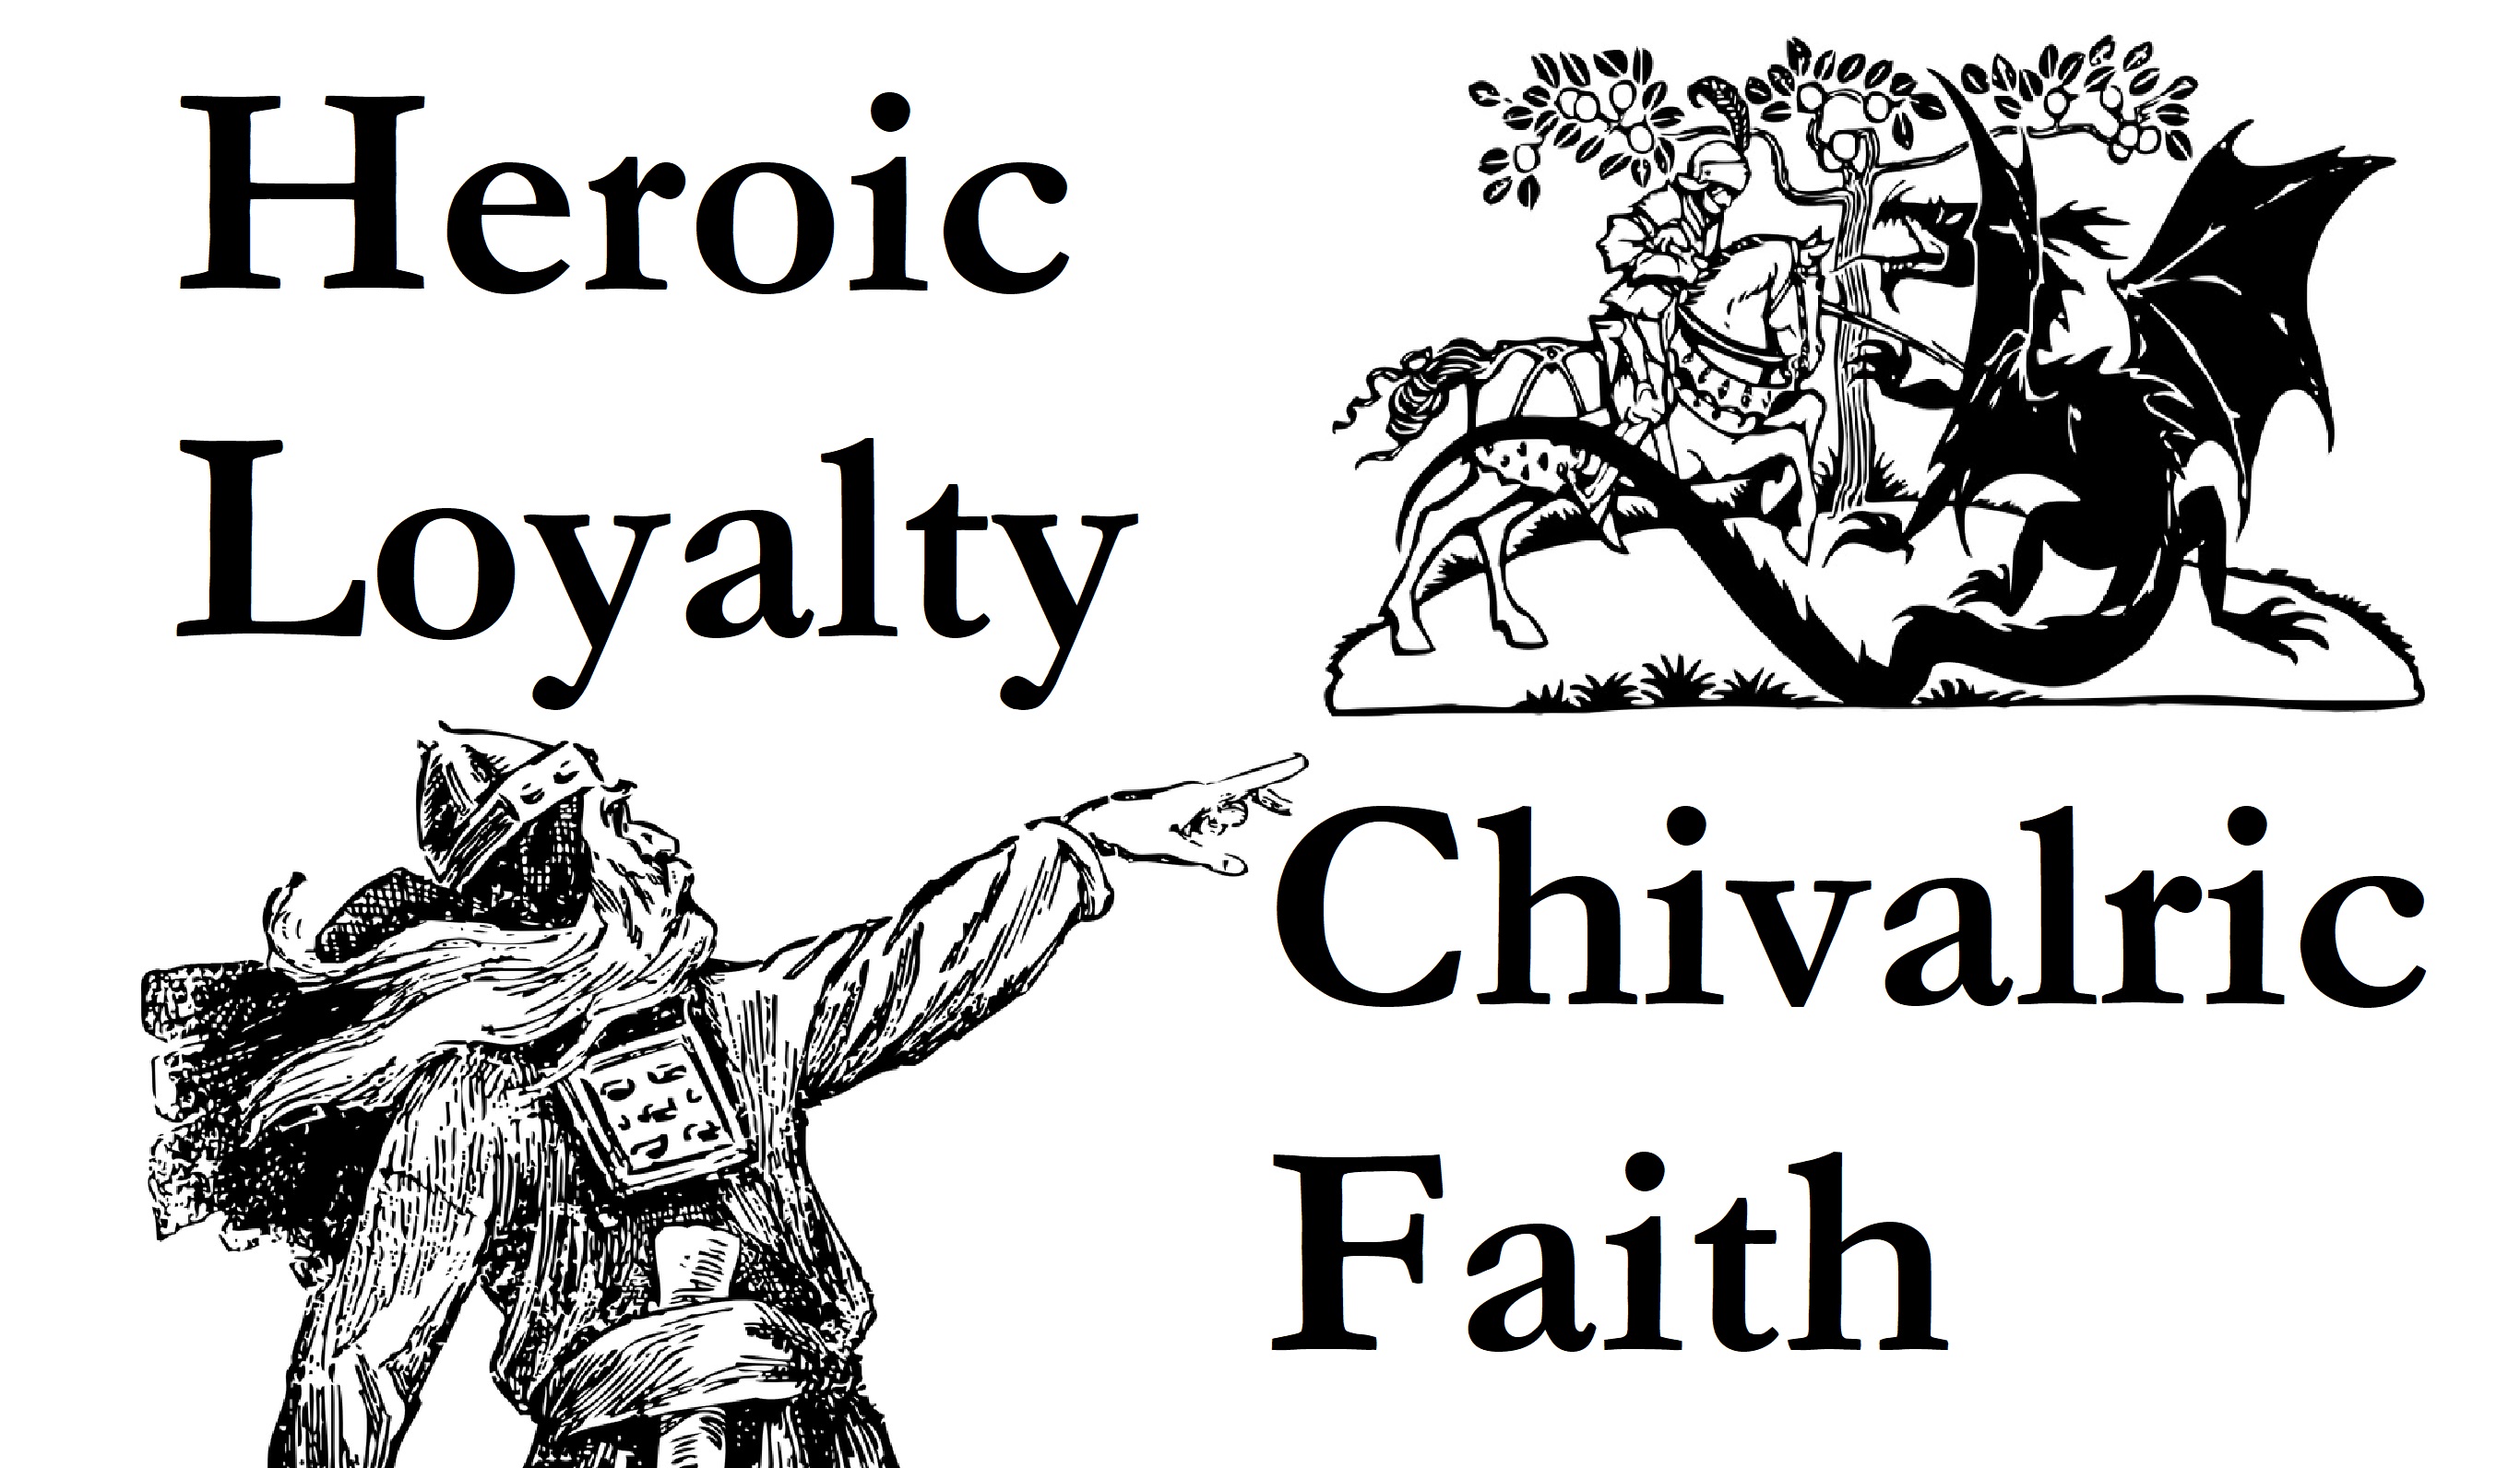 chivalry vs heroism in medieval literature